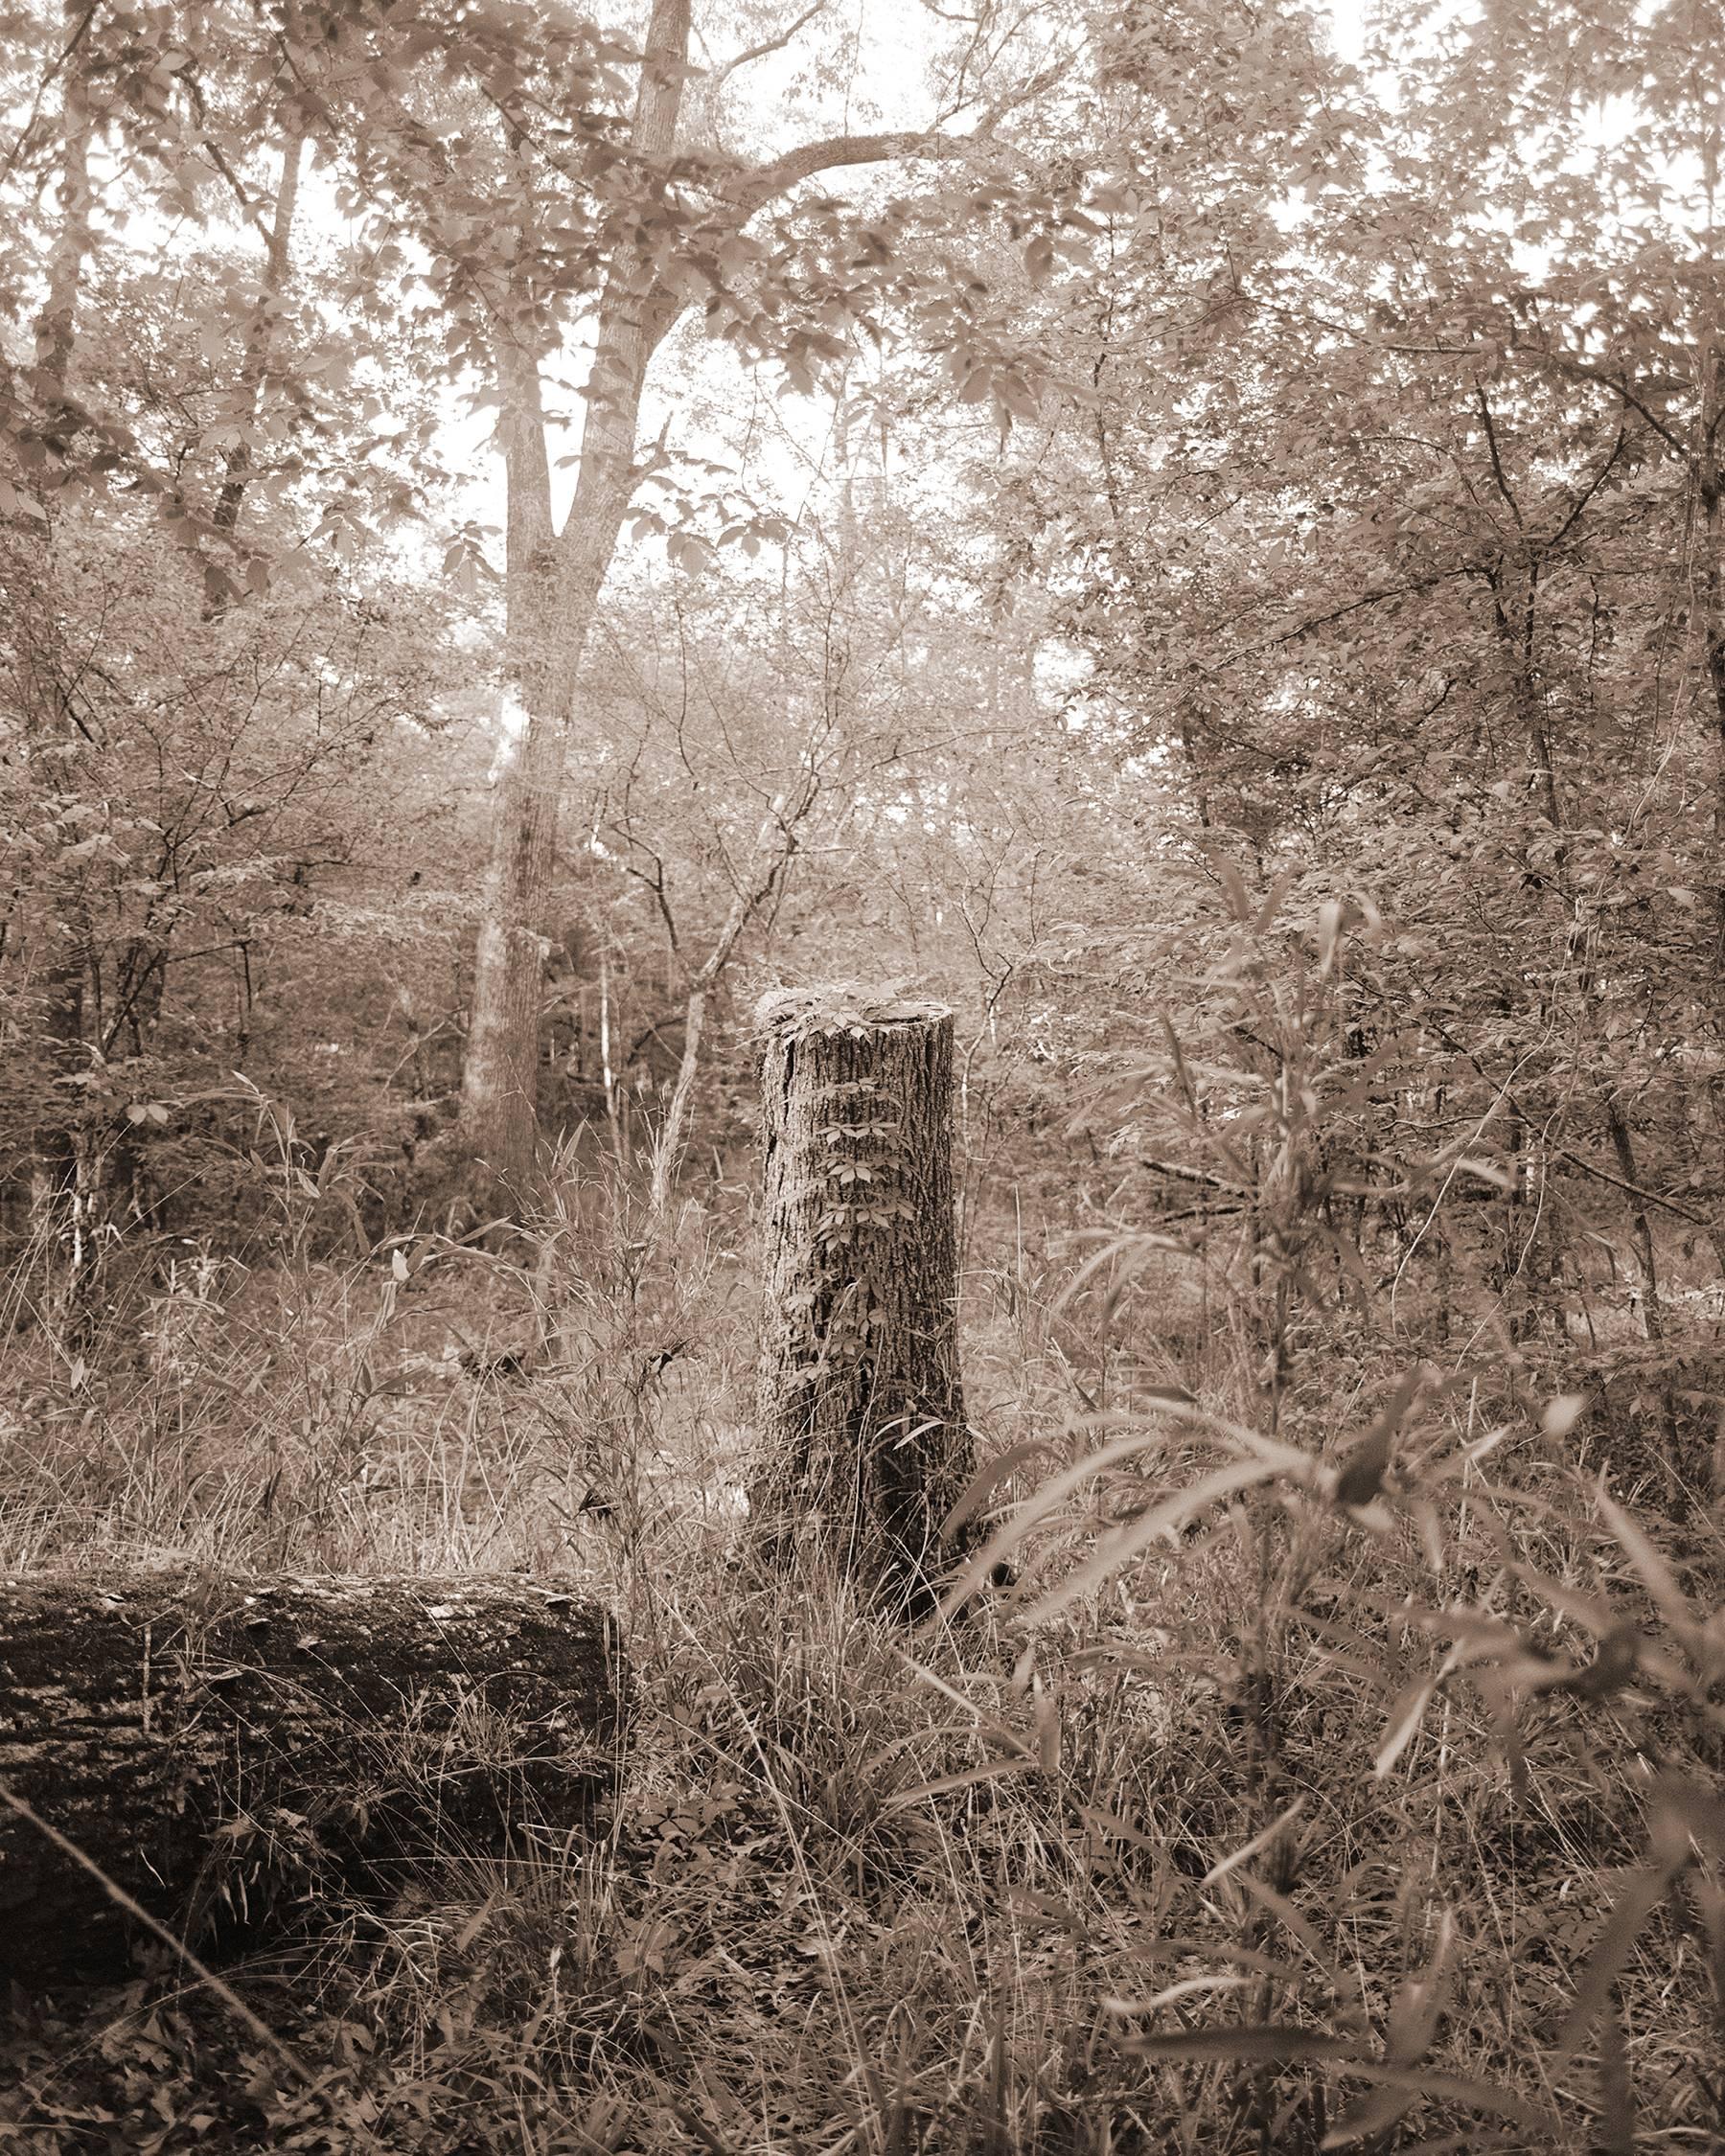 David Halliday Landscape Photograph - Stump (Contemporary Archival Pigment Print, Sepia Tone Landscape of Forest)